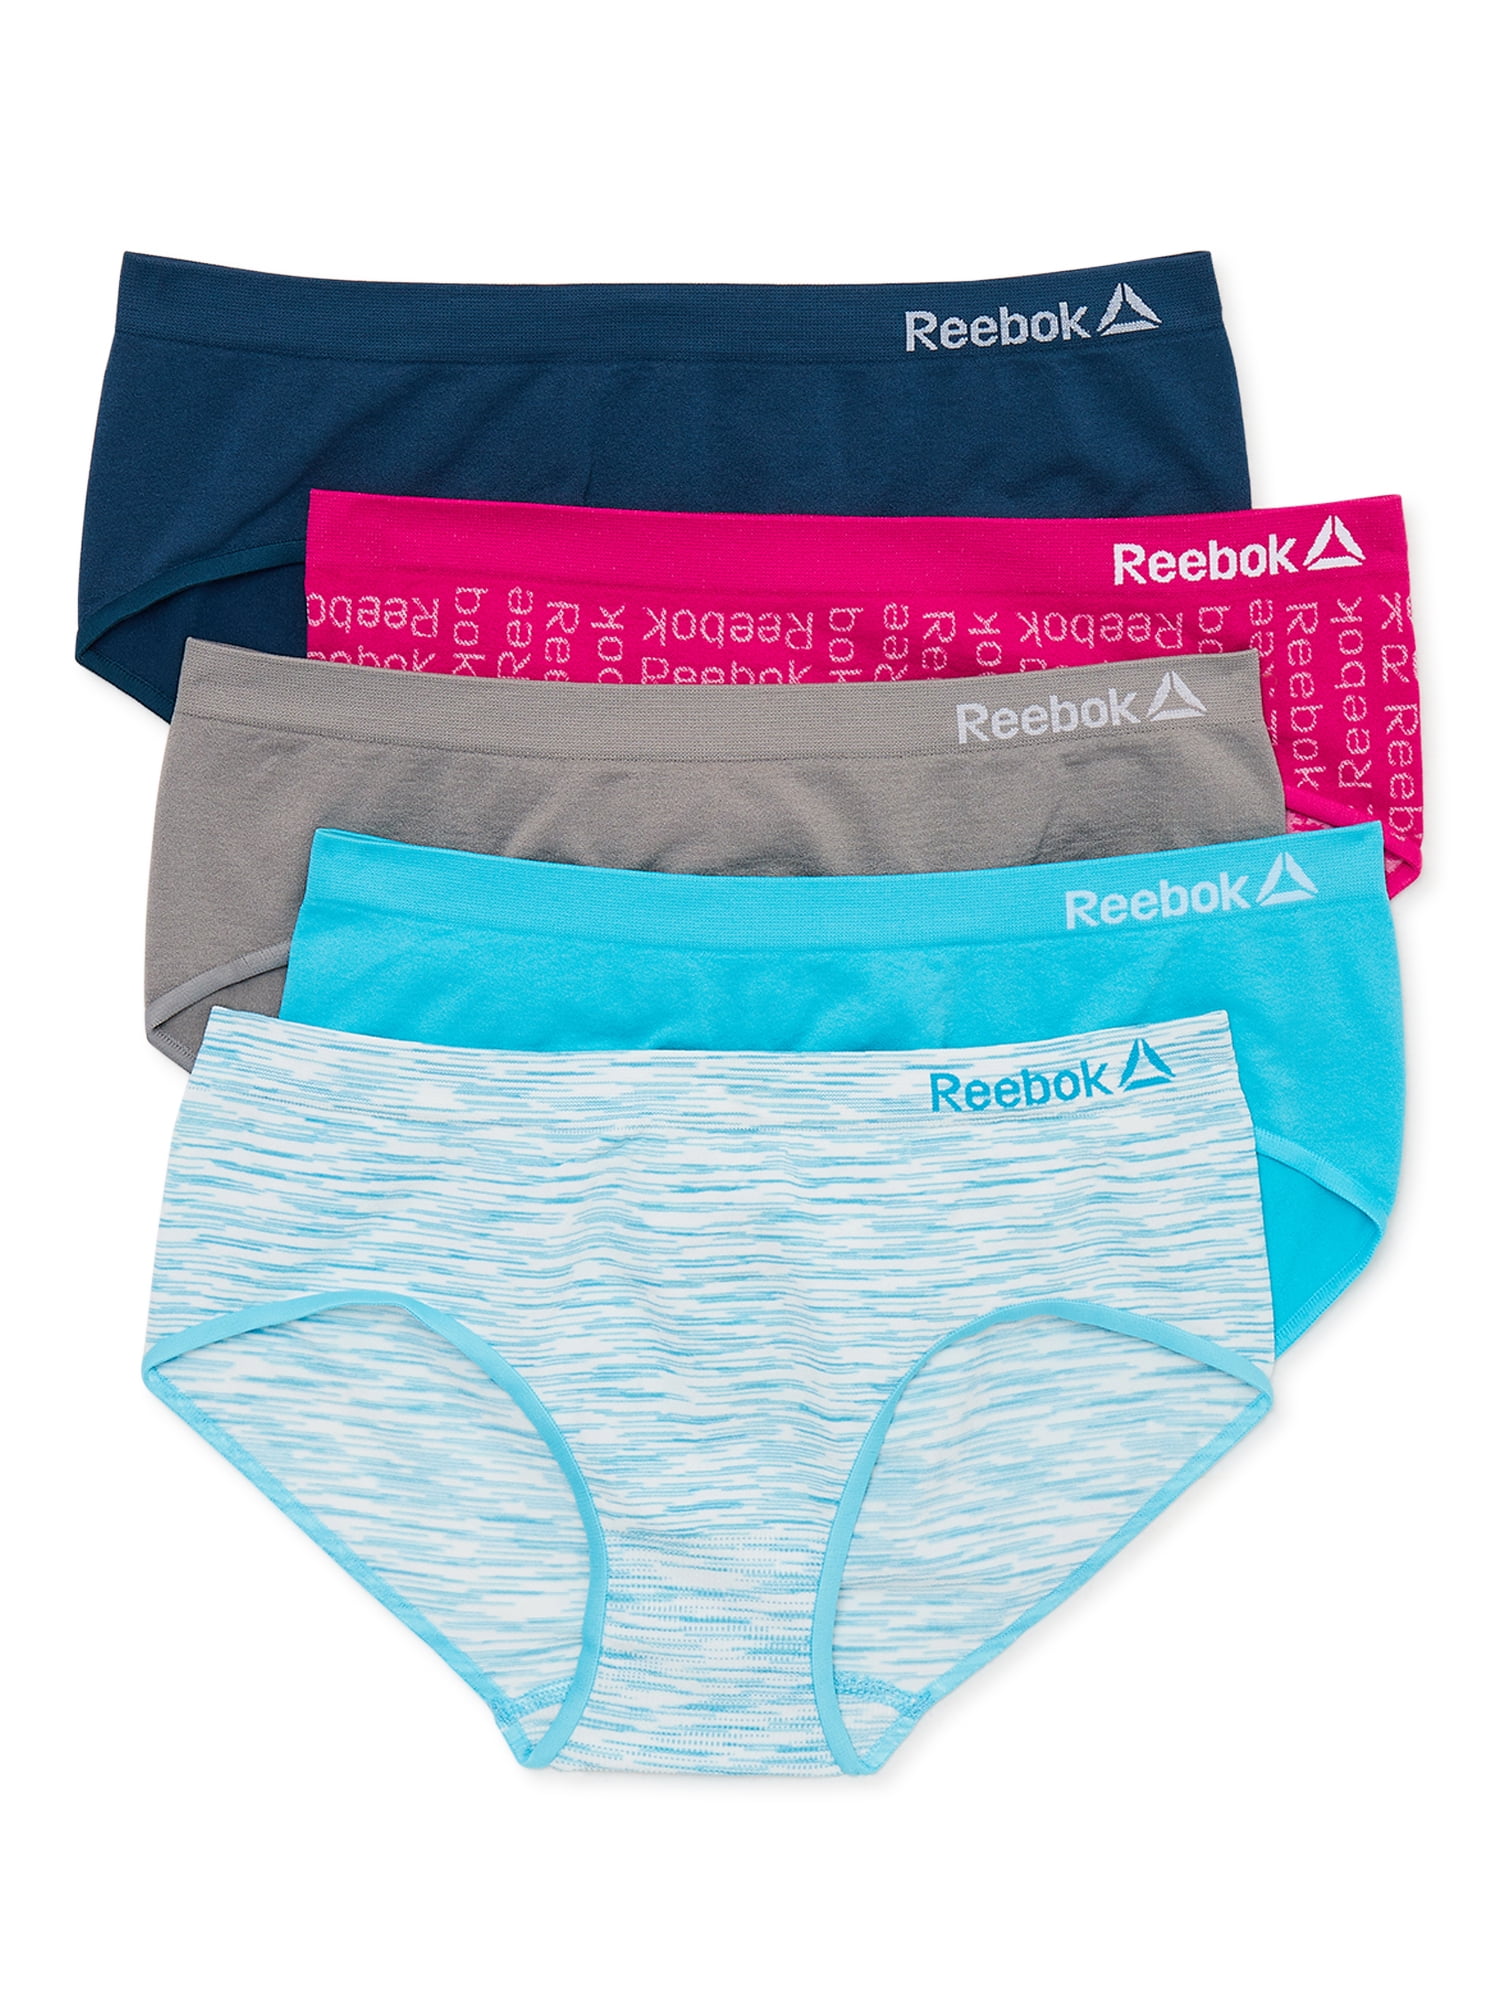 Reebok Girl's 5-Pack Seamless Hipster Girls Underwear Panties Size XL 16 